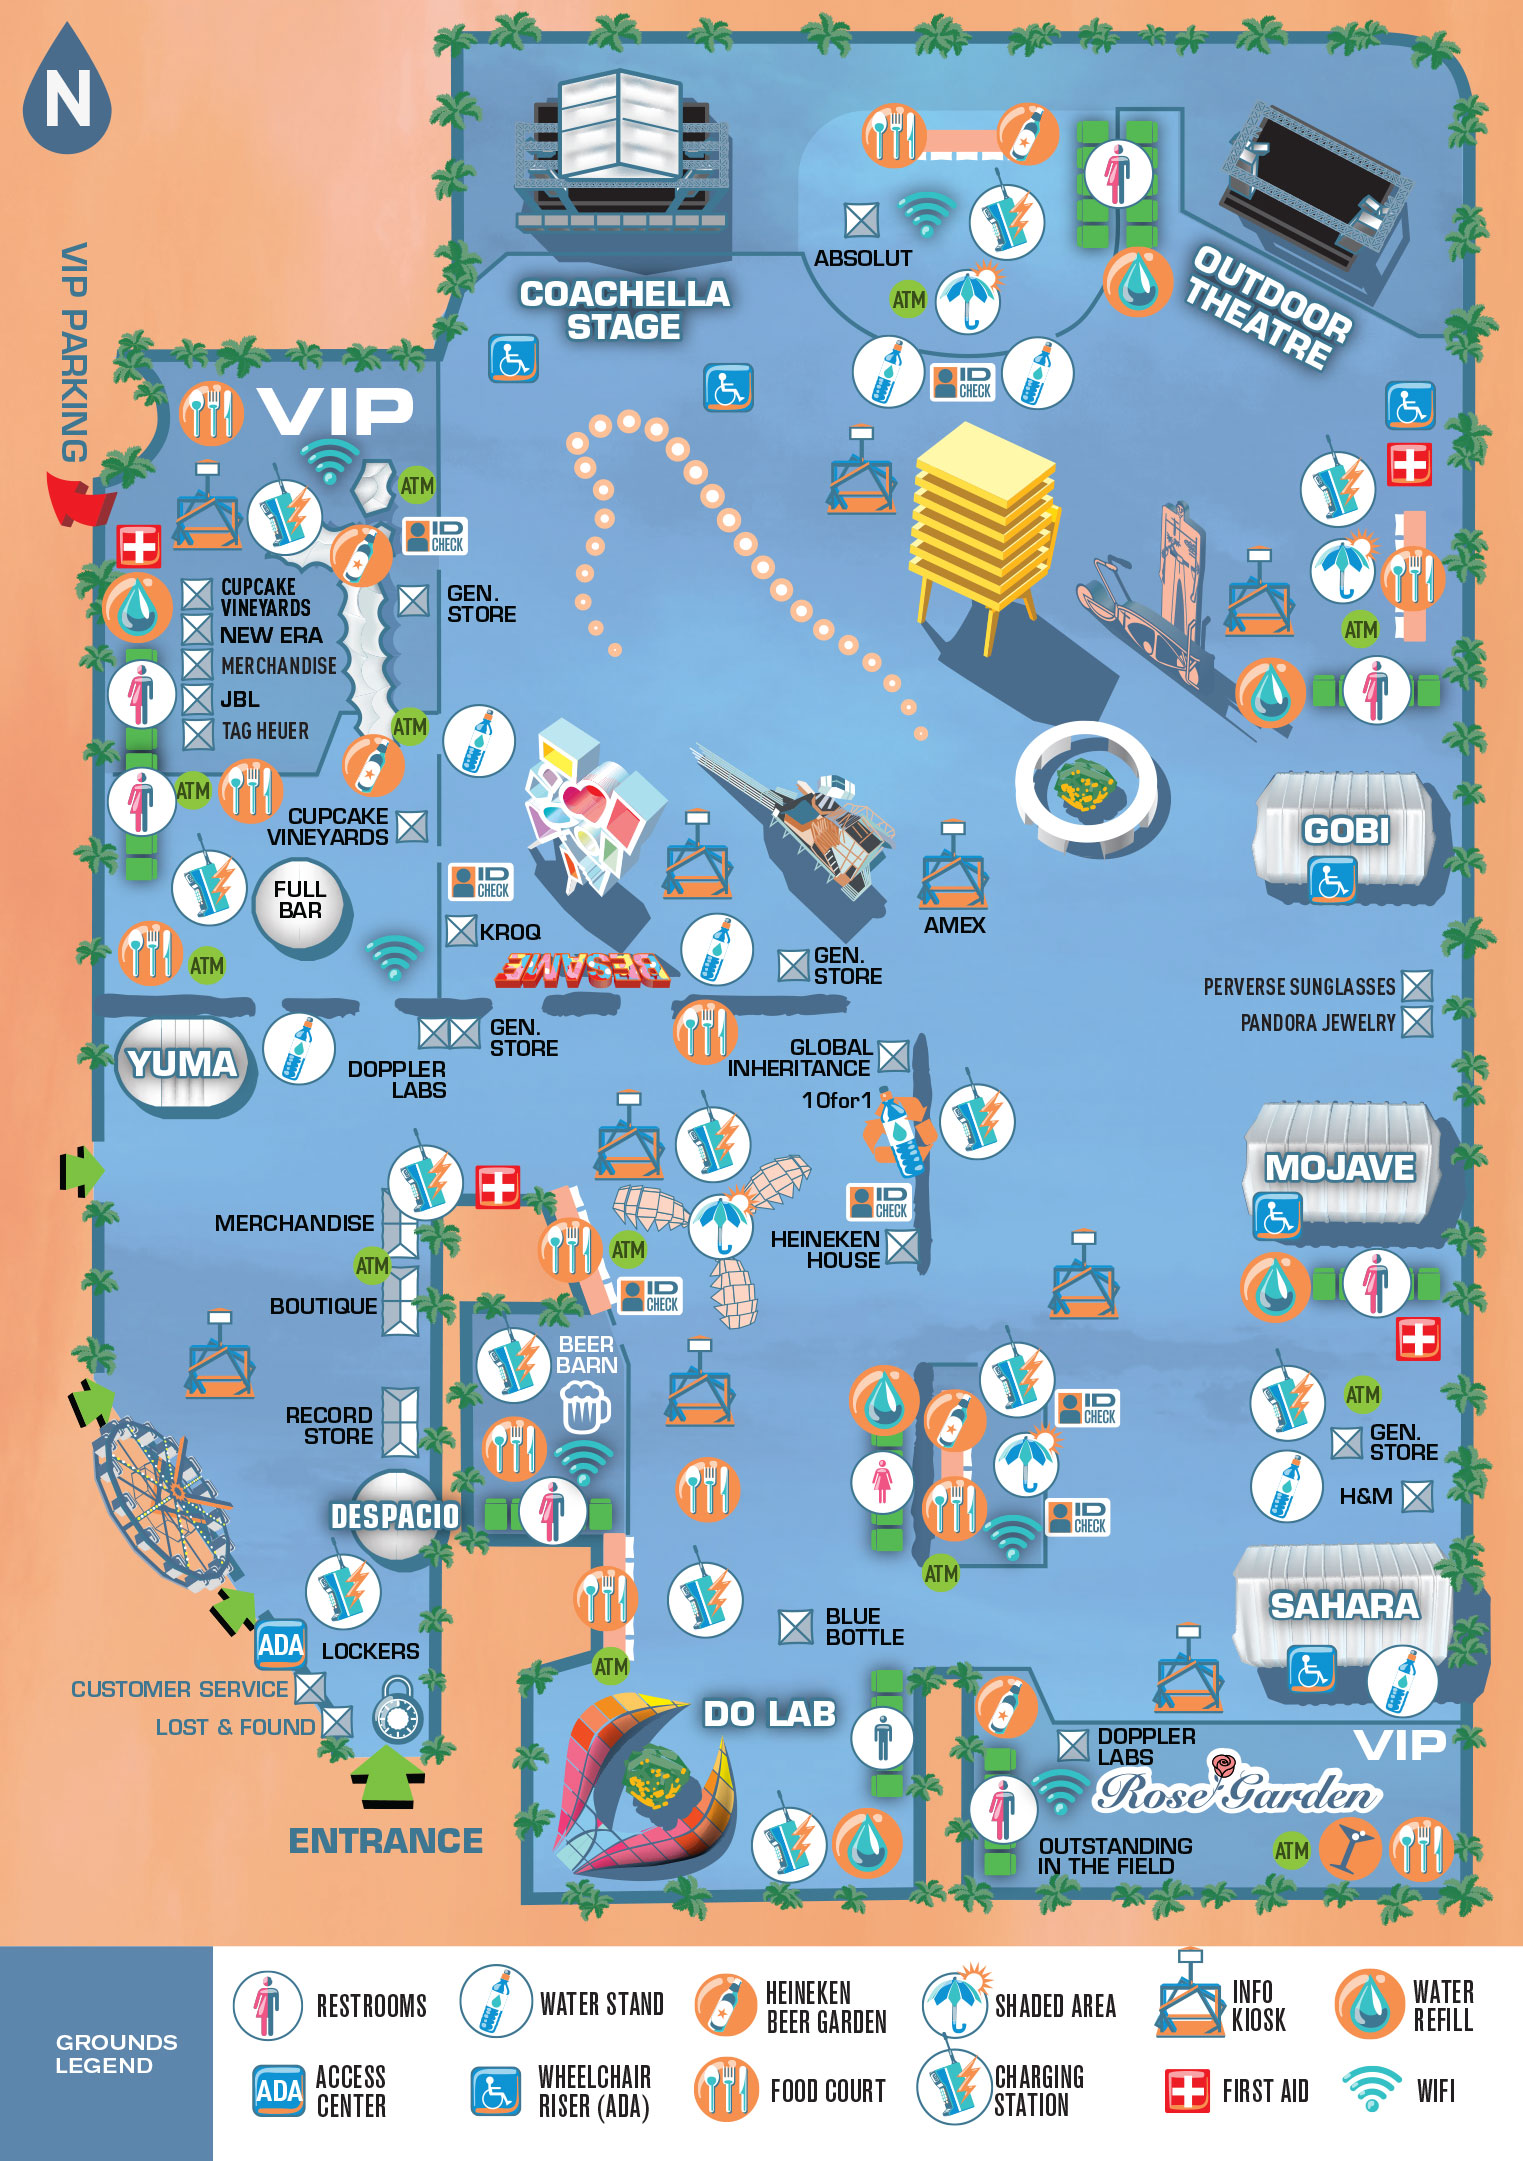 Coachella 2016 Set Times & Festival Map Announced GDE